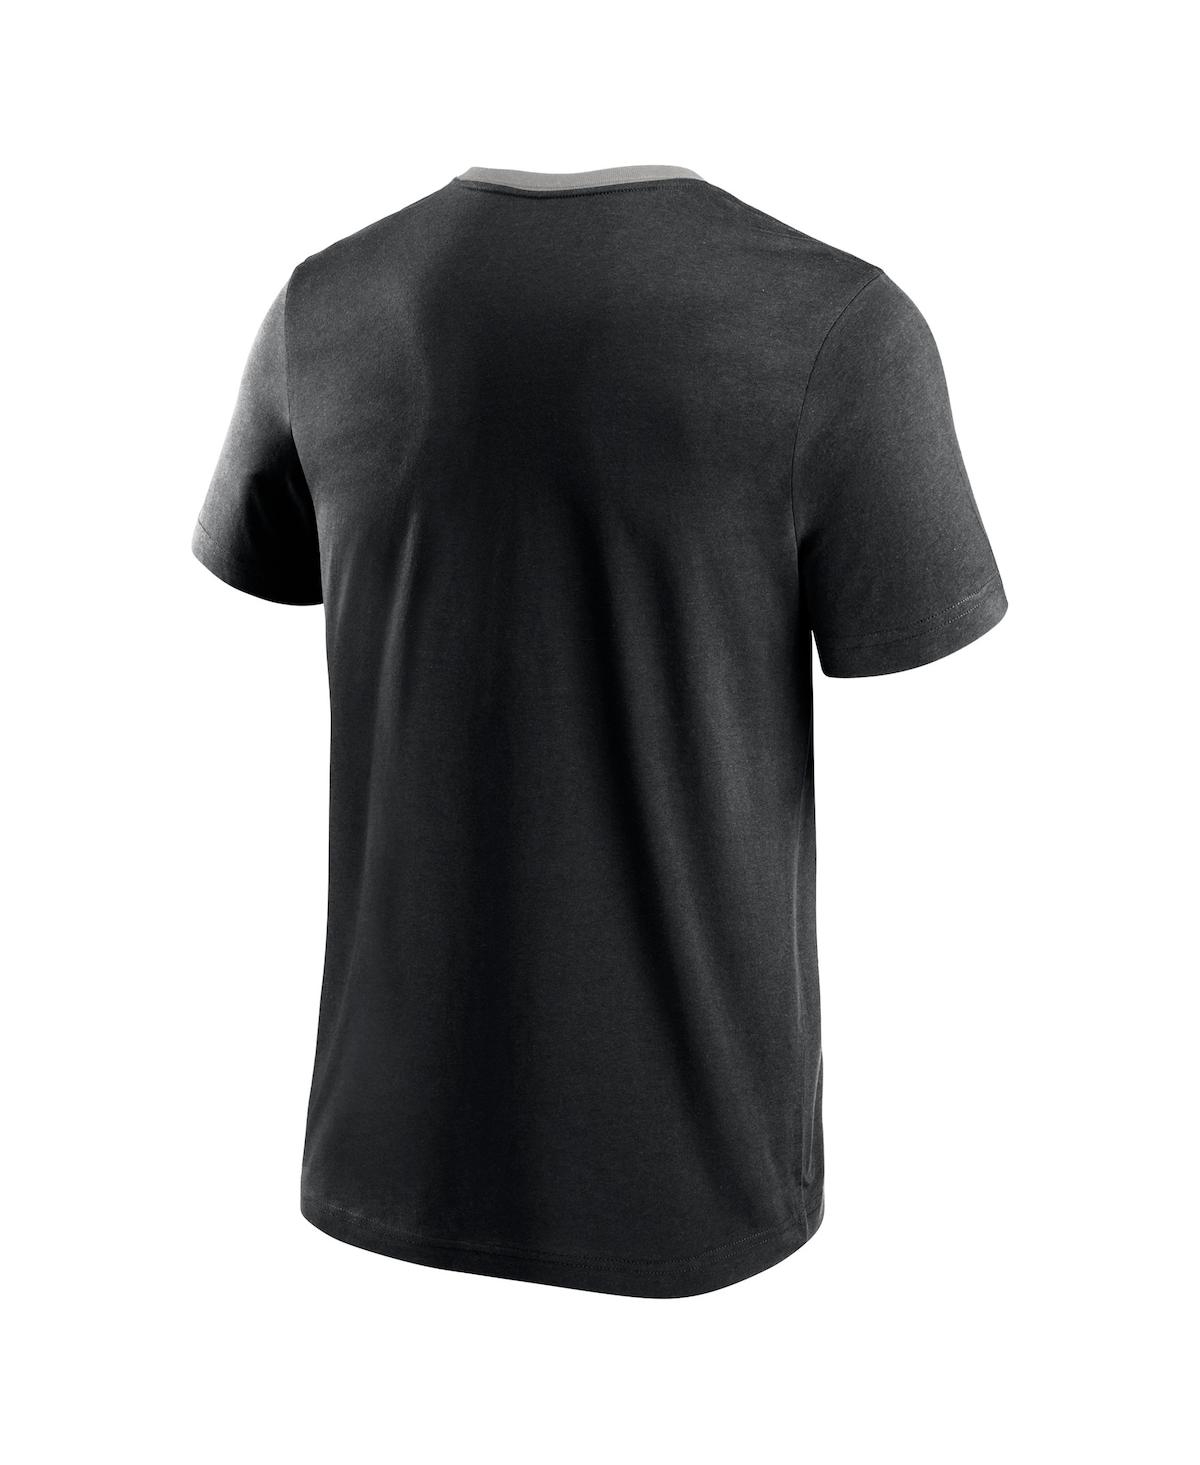 Shop Fanatics Men's  Black Chicago White Sox Claim The Win T-shirt